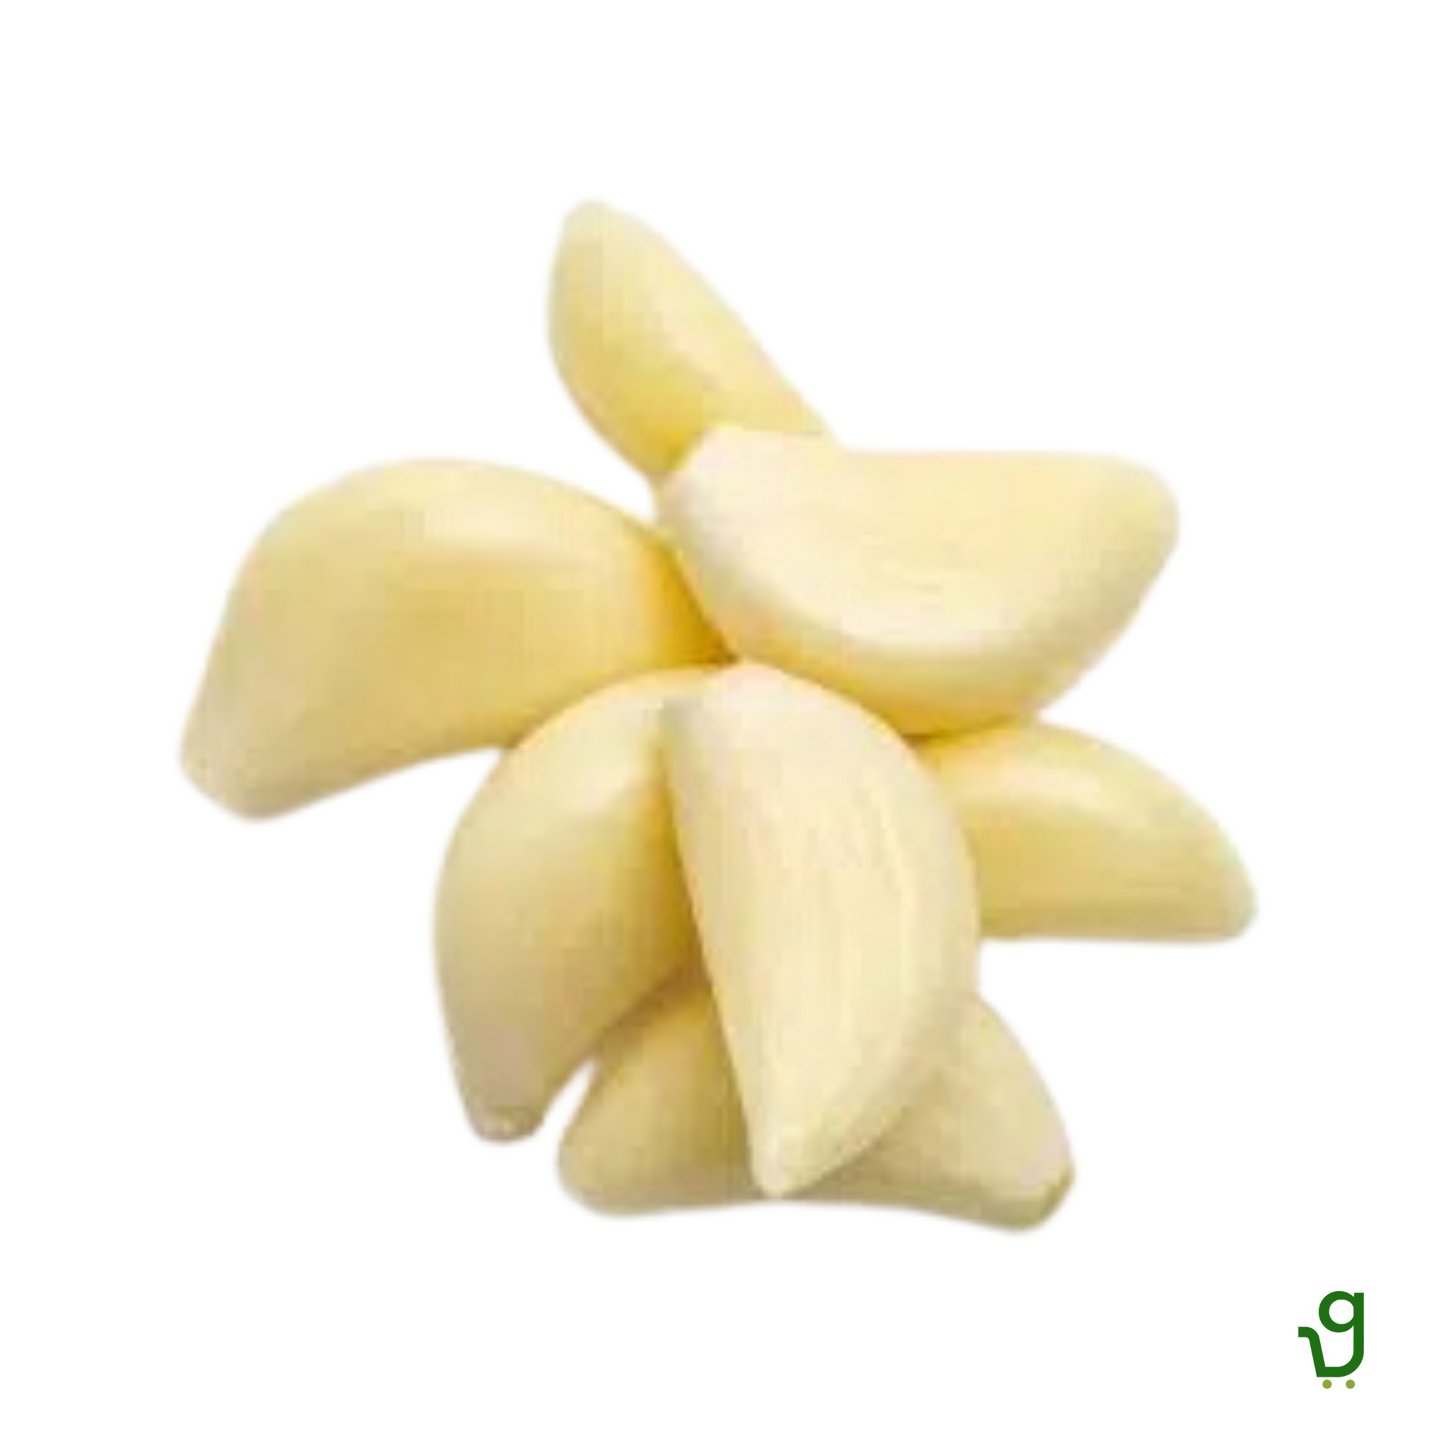 Peeled Garlic (500g)